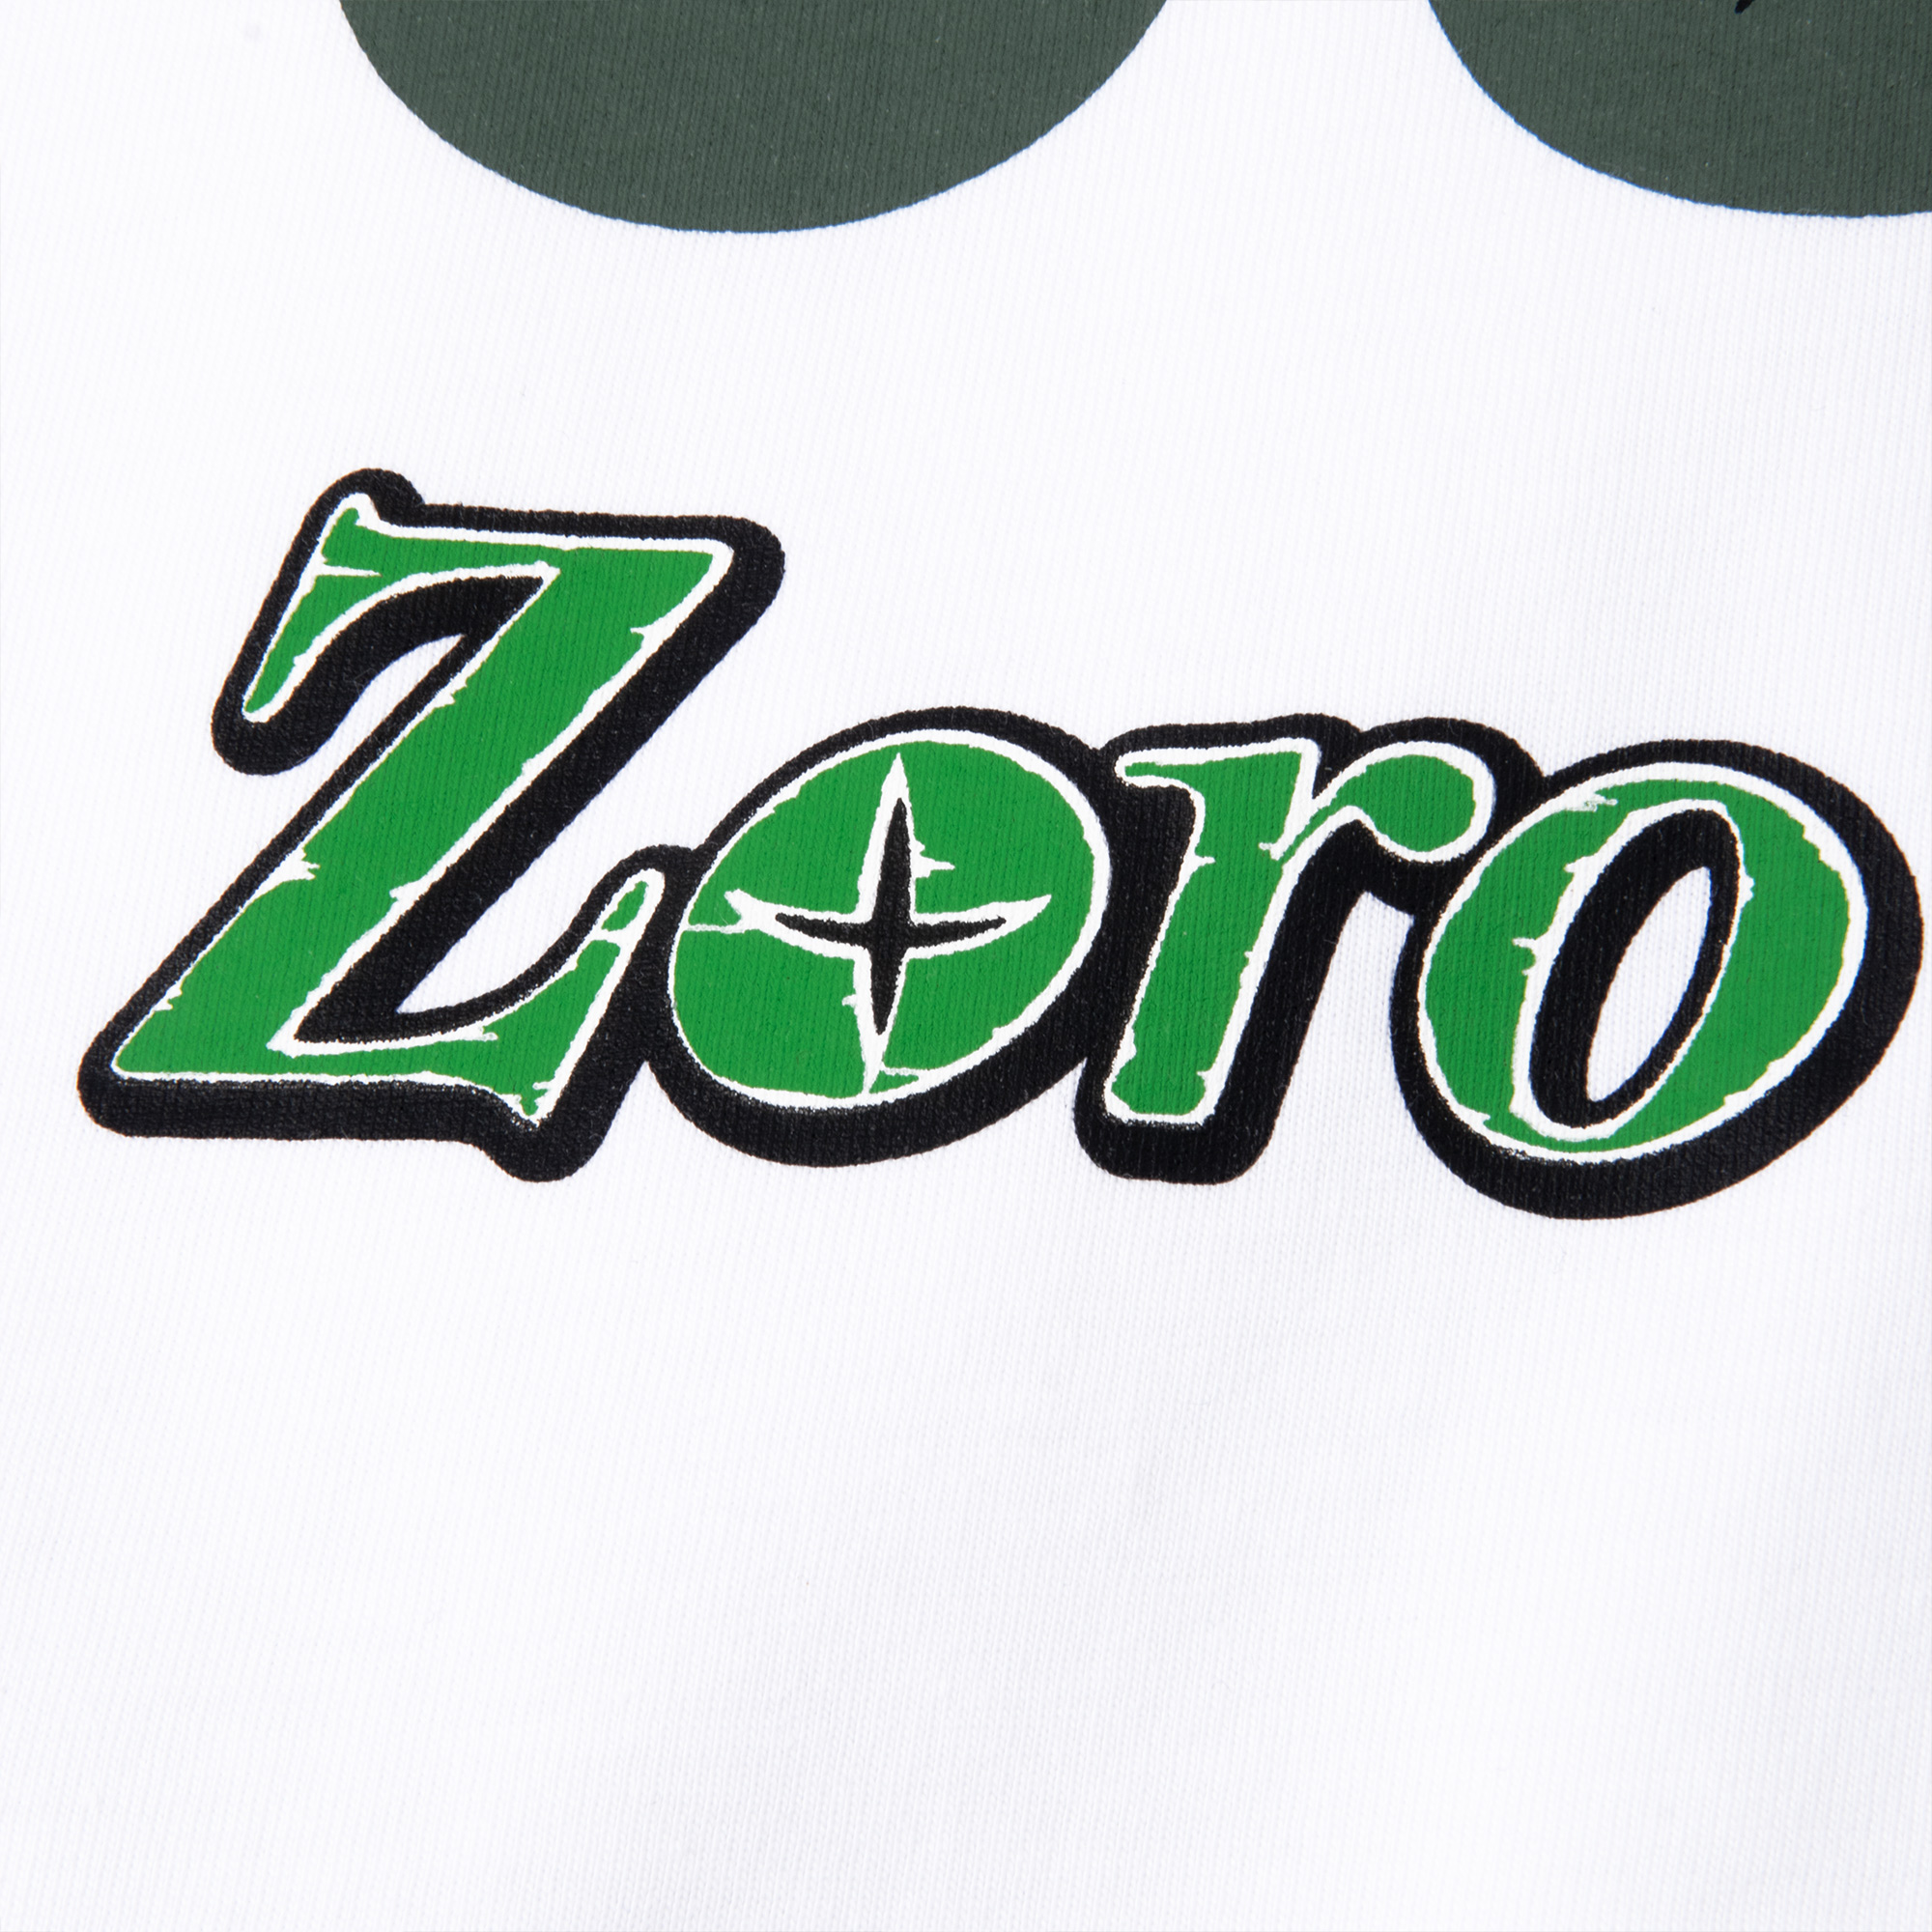 DC x OP Zoro T-Shirt - White